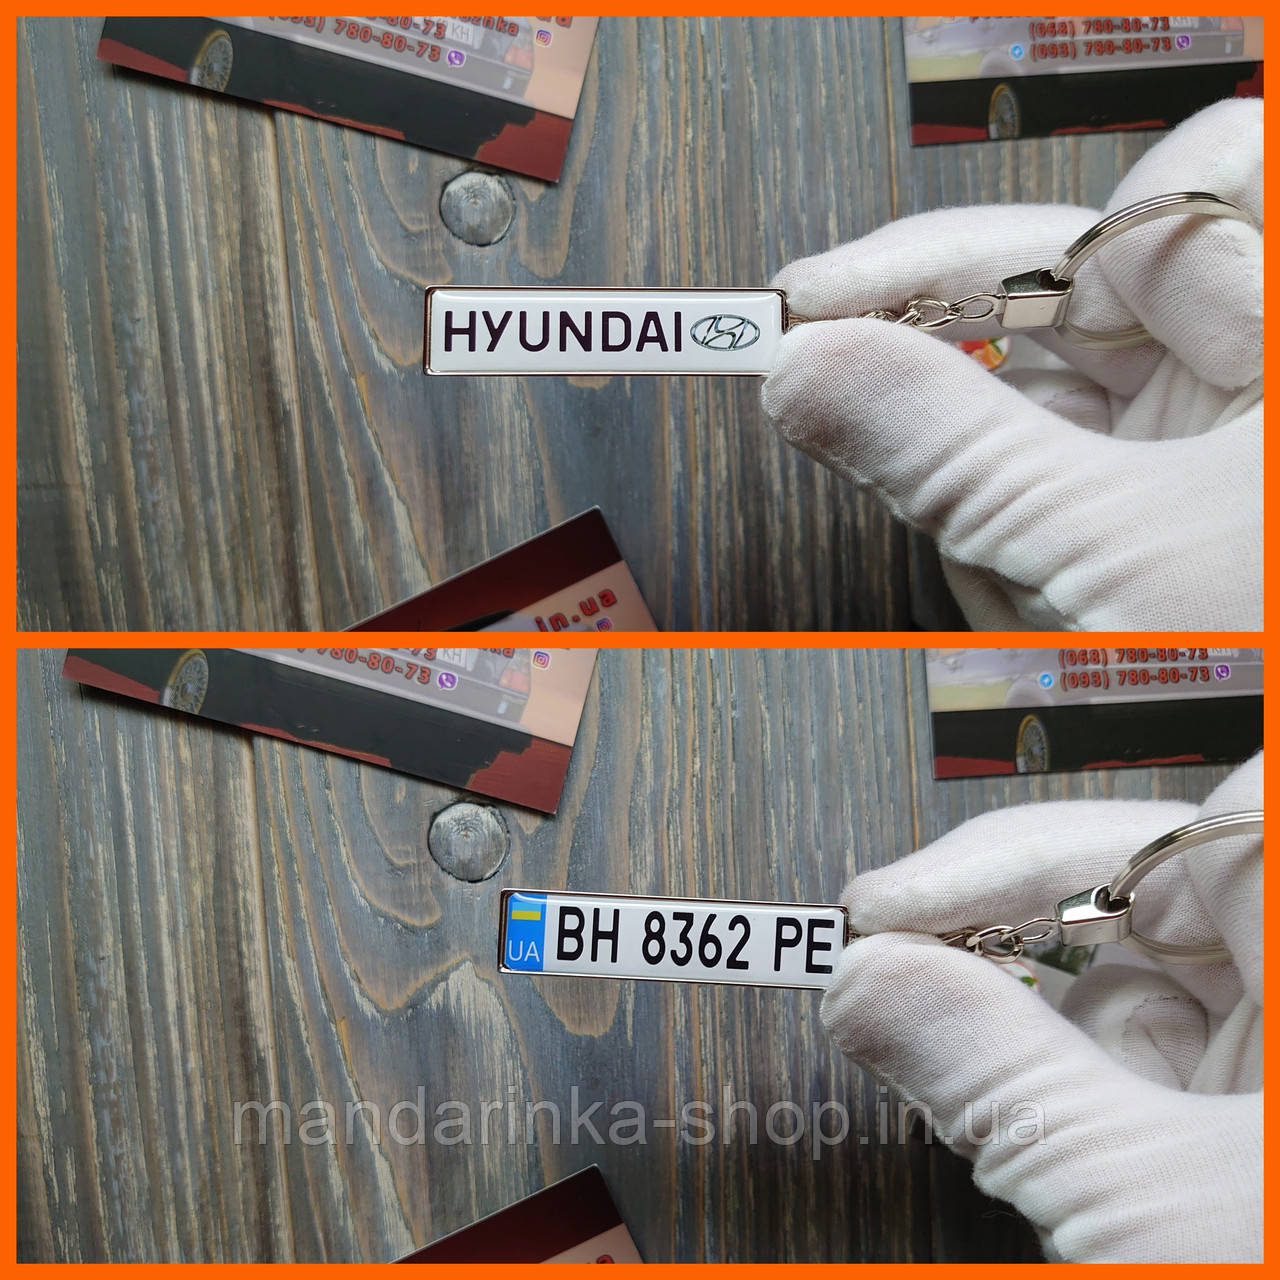 Брелок держ. номер Hyundai (Двосторонній Black), брелок з логотипом Хюндай